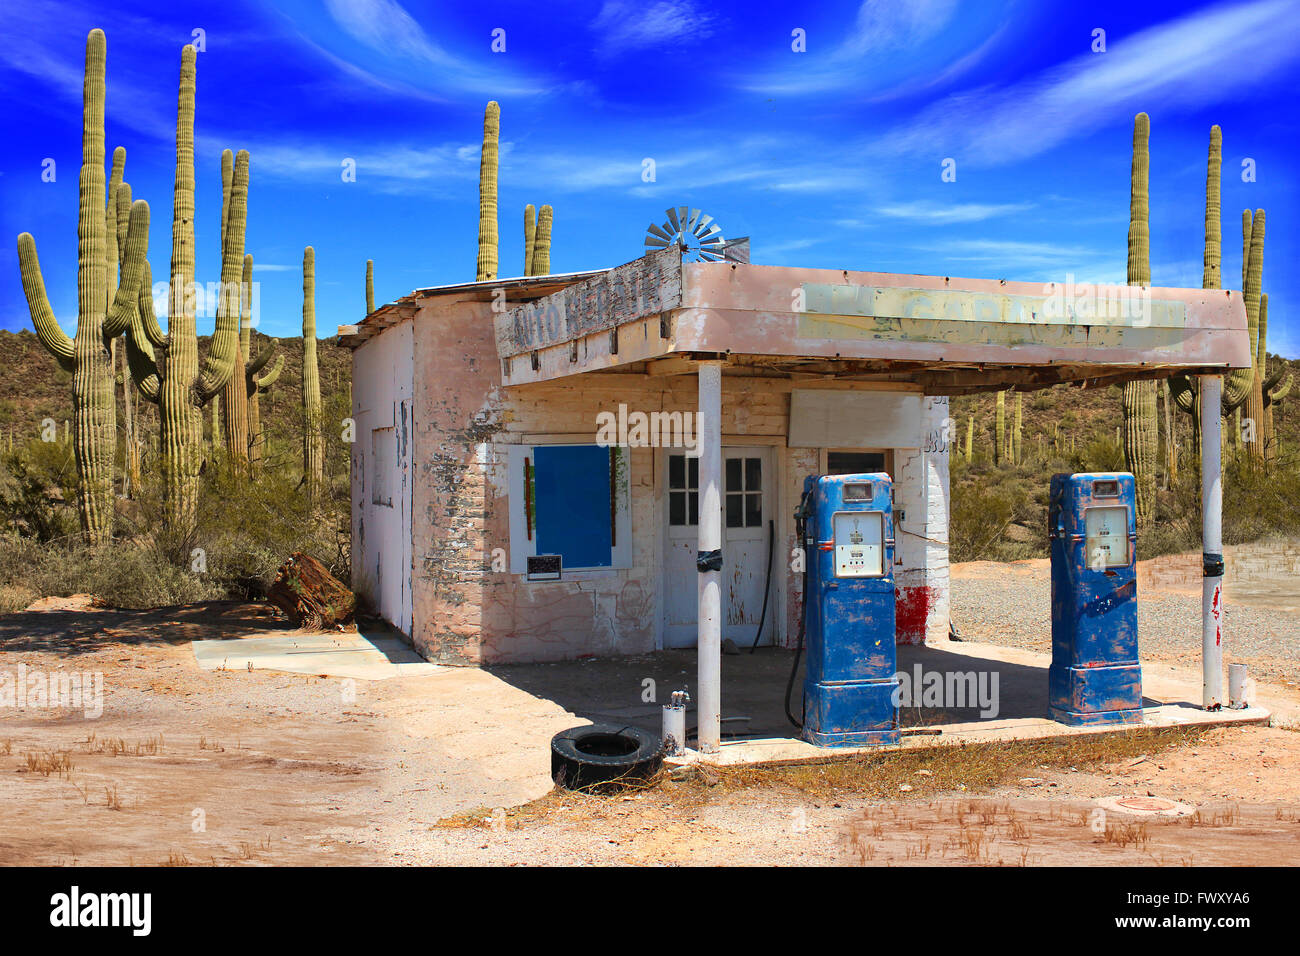 Abandoned Vintage Gas Station in Arizona Desert Stock Photo